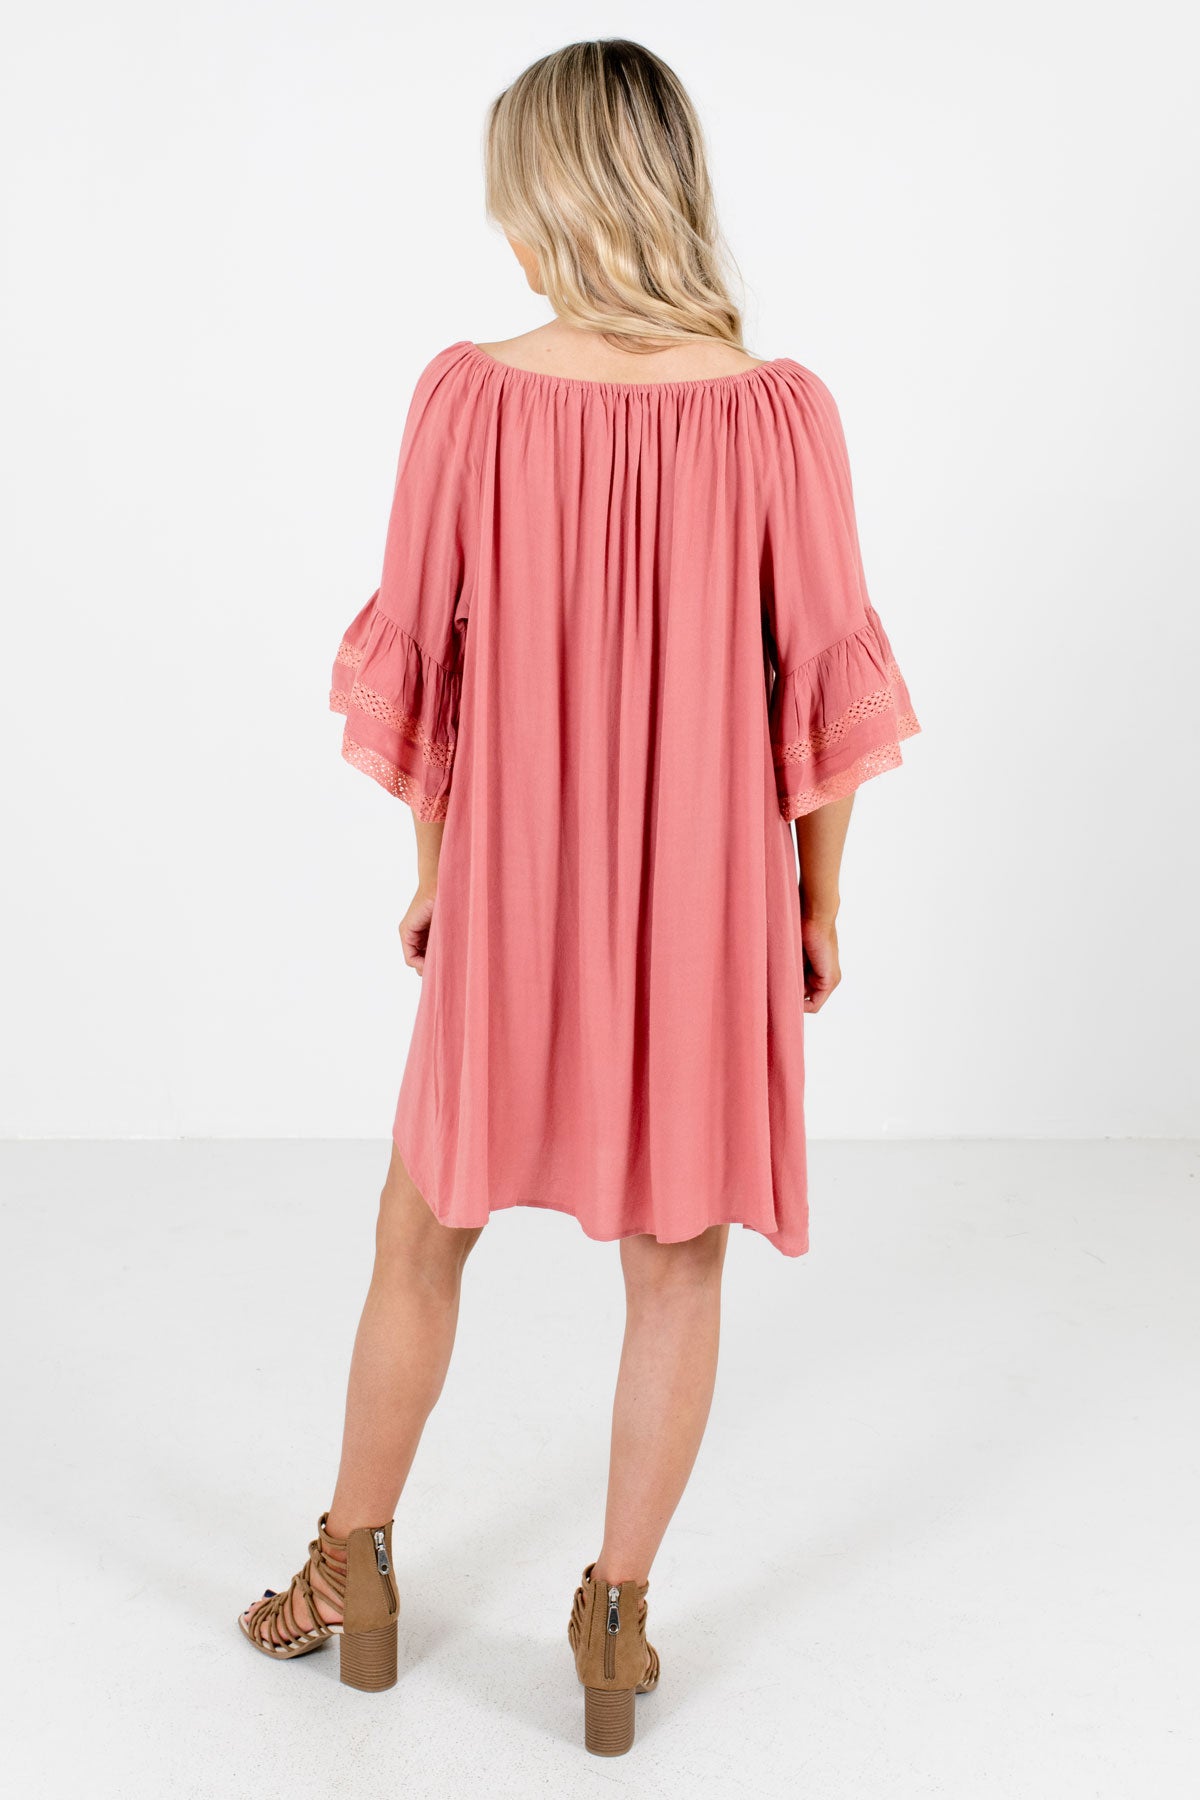 Women's Pink Bell Sleeve Boutique Mini Dress